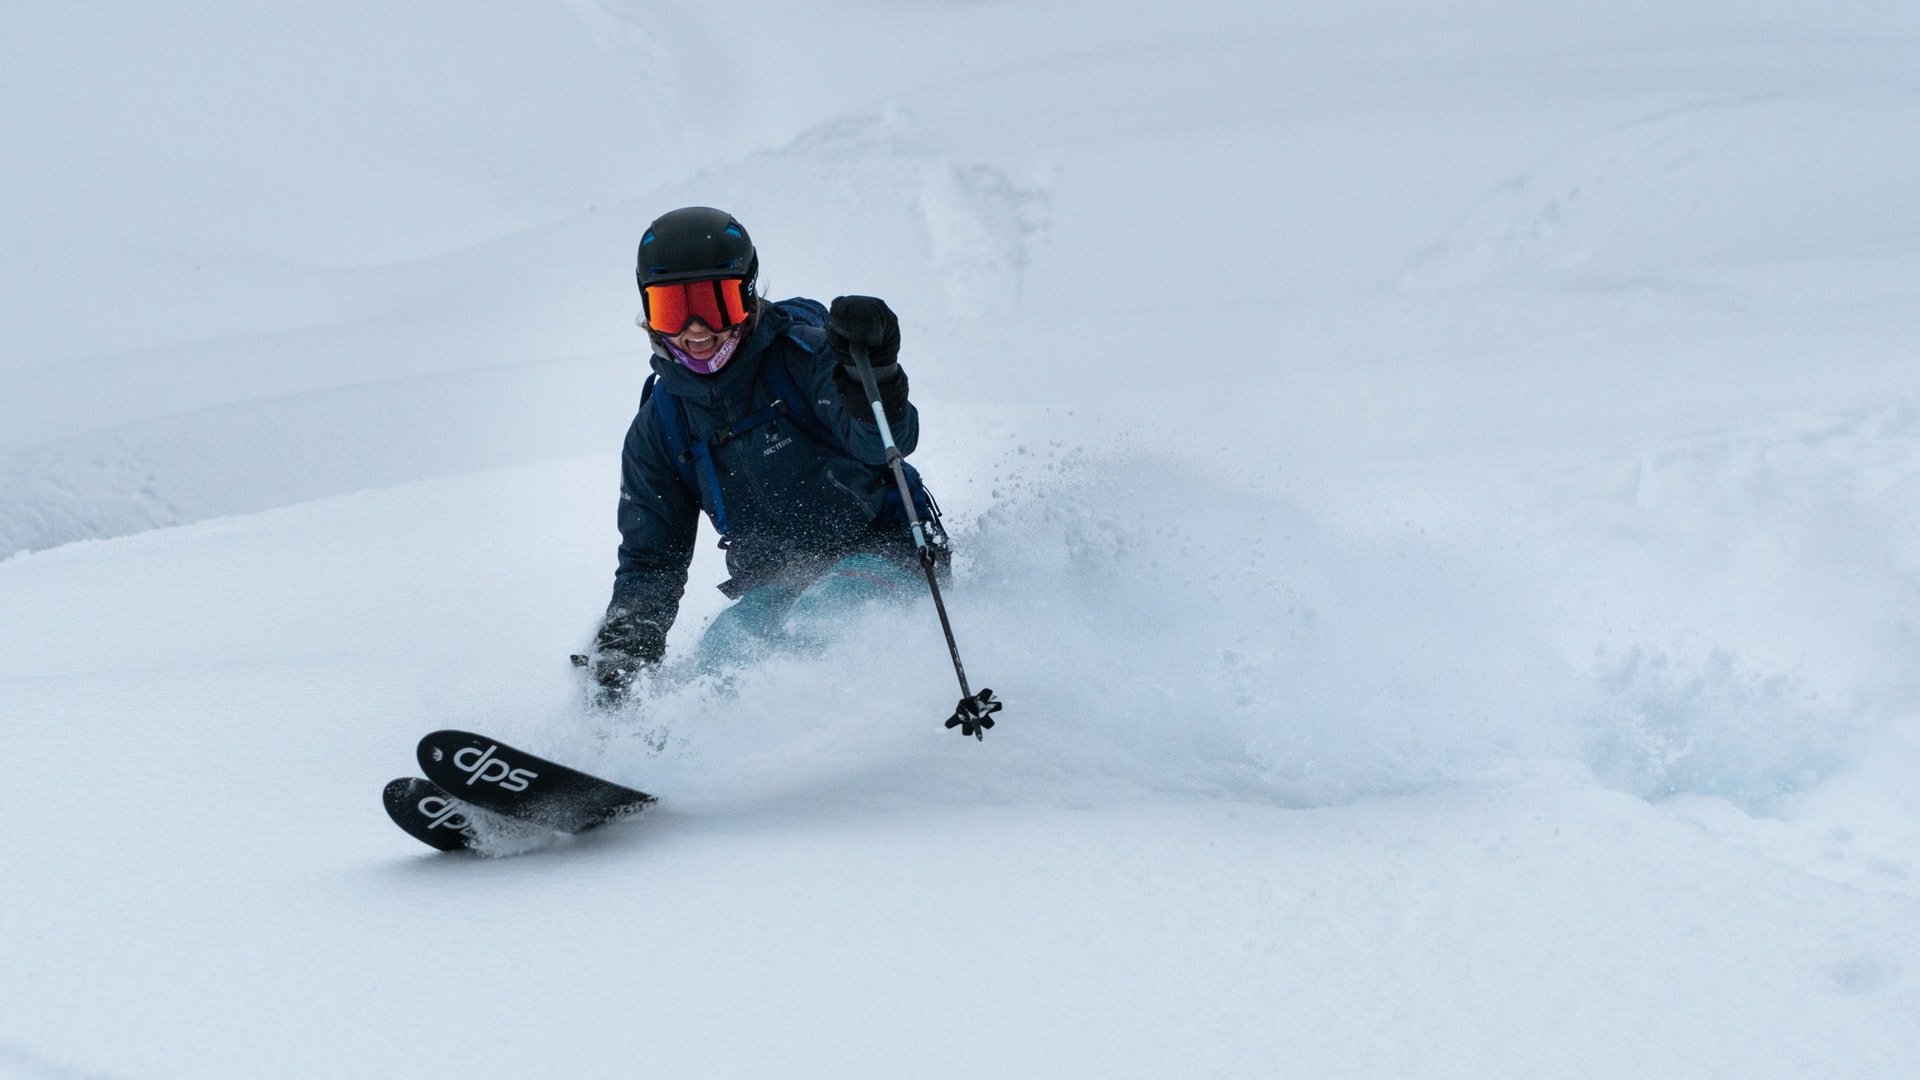 skier in blue jacket and orange googles slashing a turn in powder